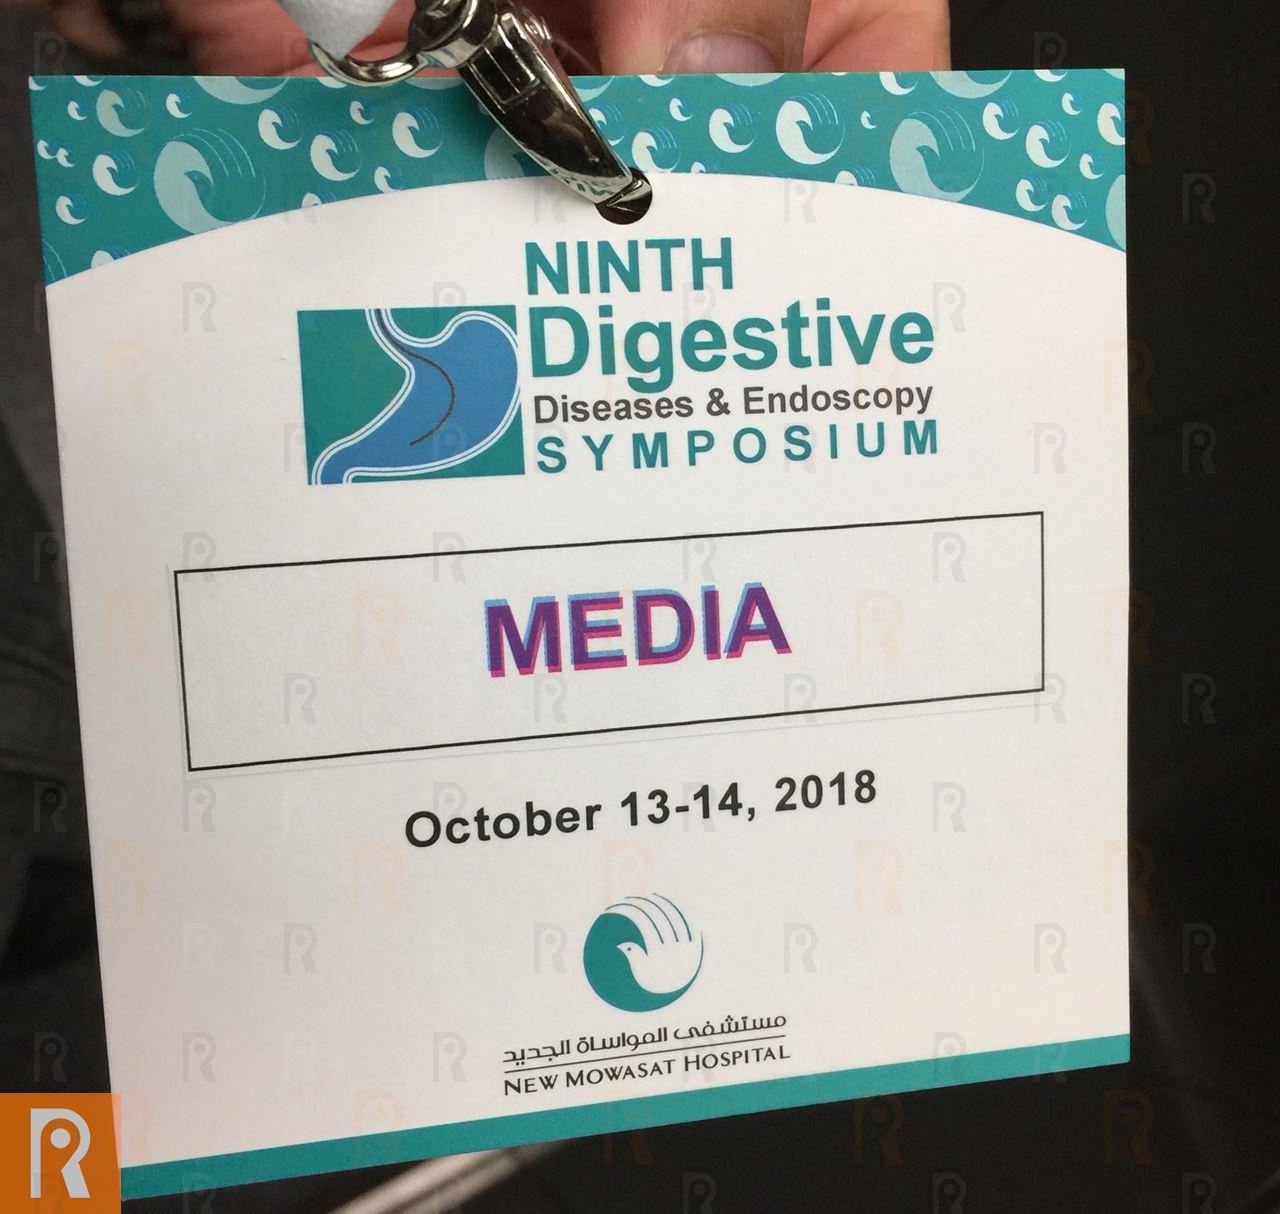 Ninth Digestive Diseases & Endoscopy Symposium